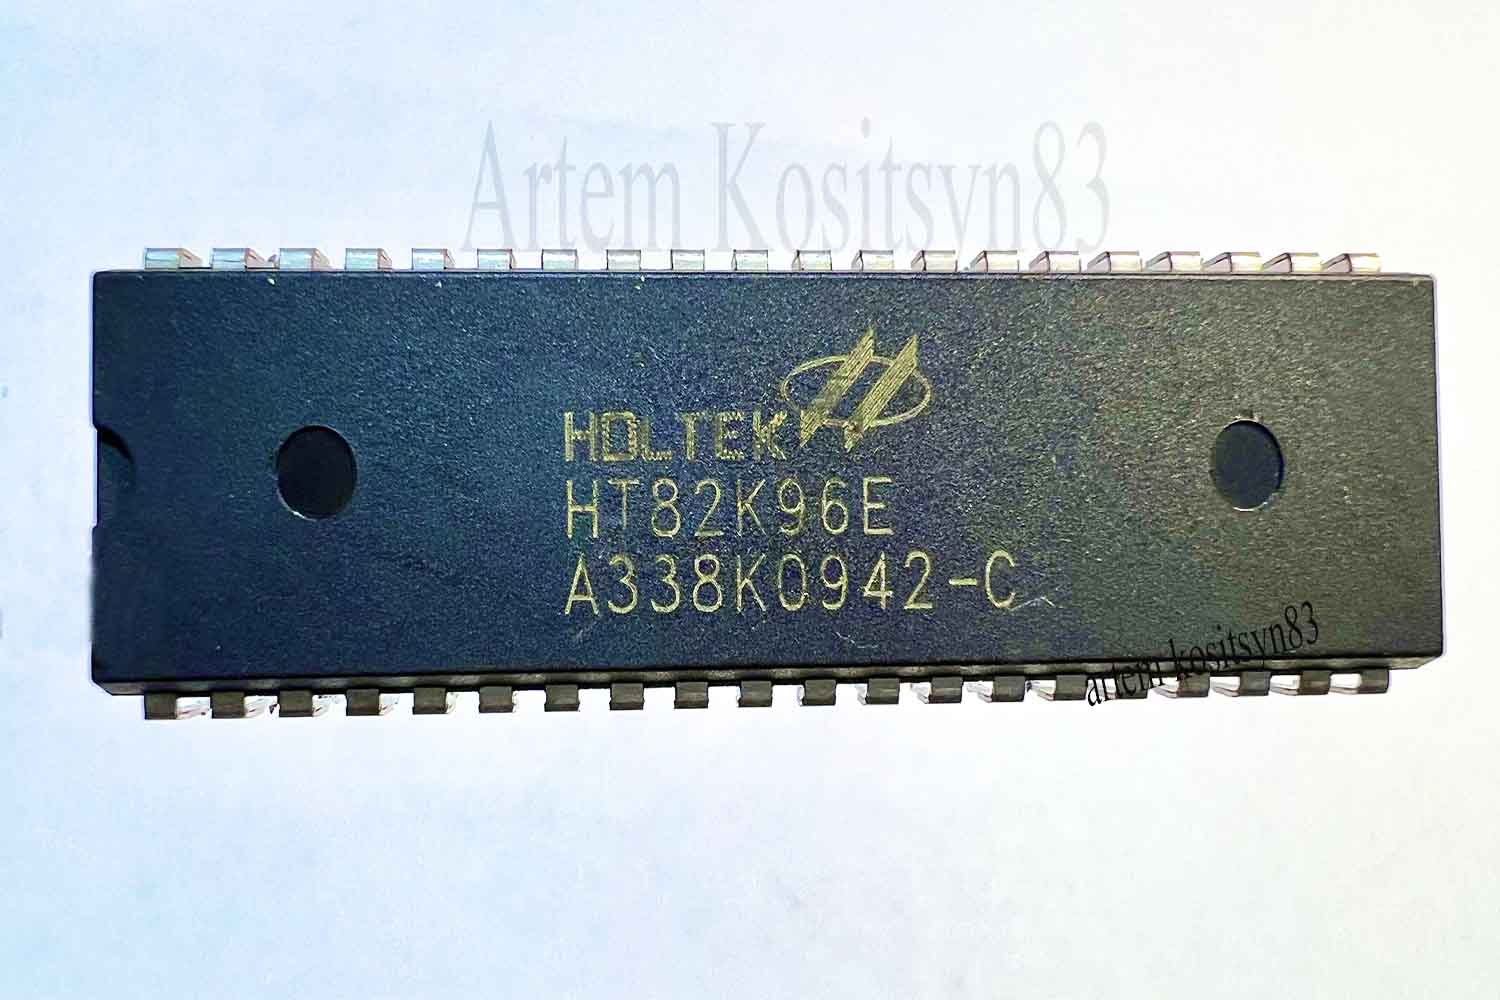 Подробнее о статье HT82K96E.8-bit USB multimedia keyboard encoder OTP MCU